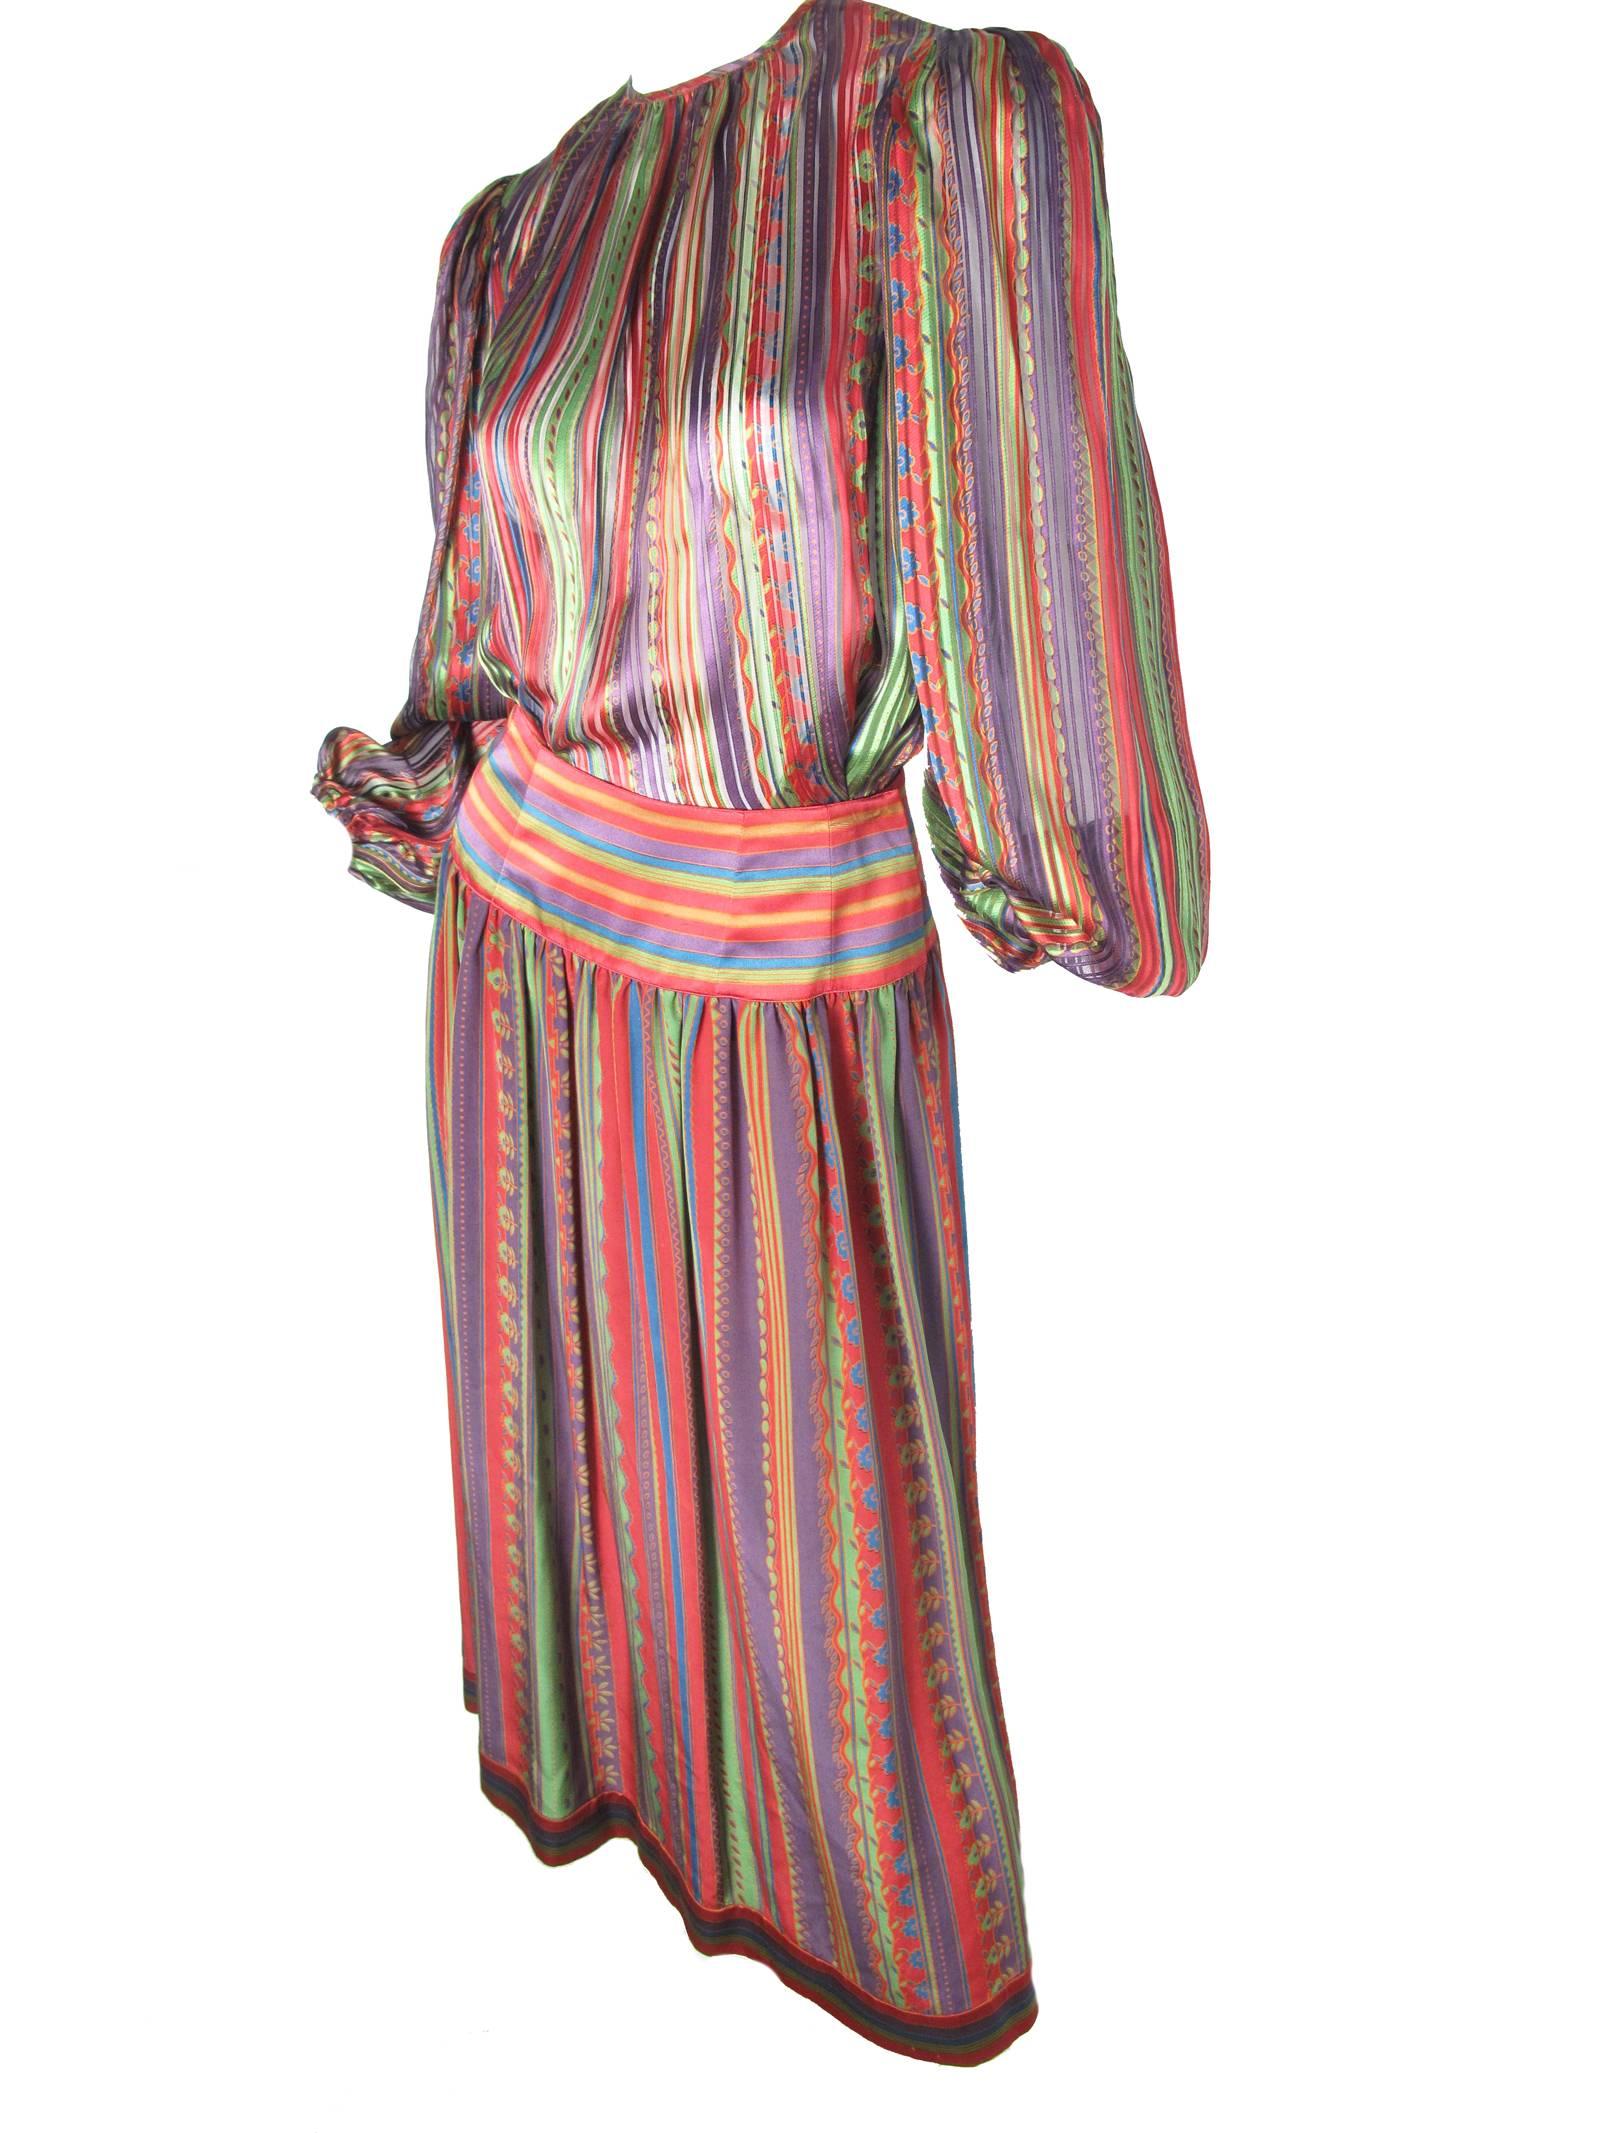 1980s Oscar de la Renta silk chiffon peasant blouse and silk skirt.  Condition: Excellent. Size 4
Top: 40